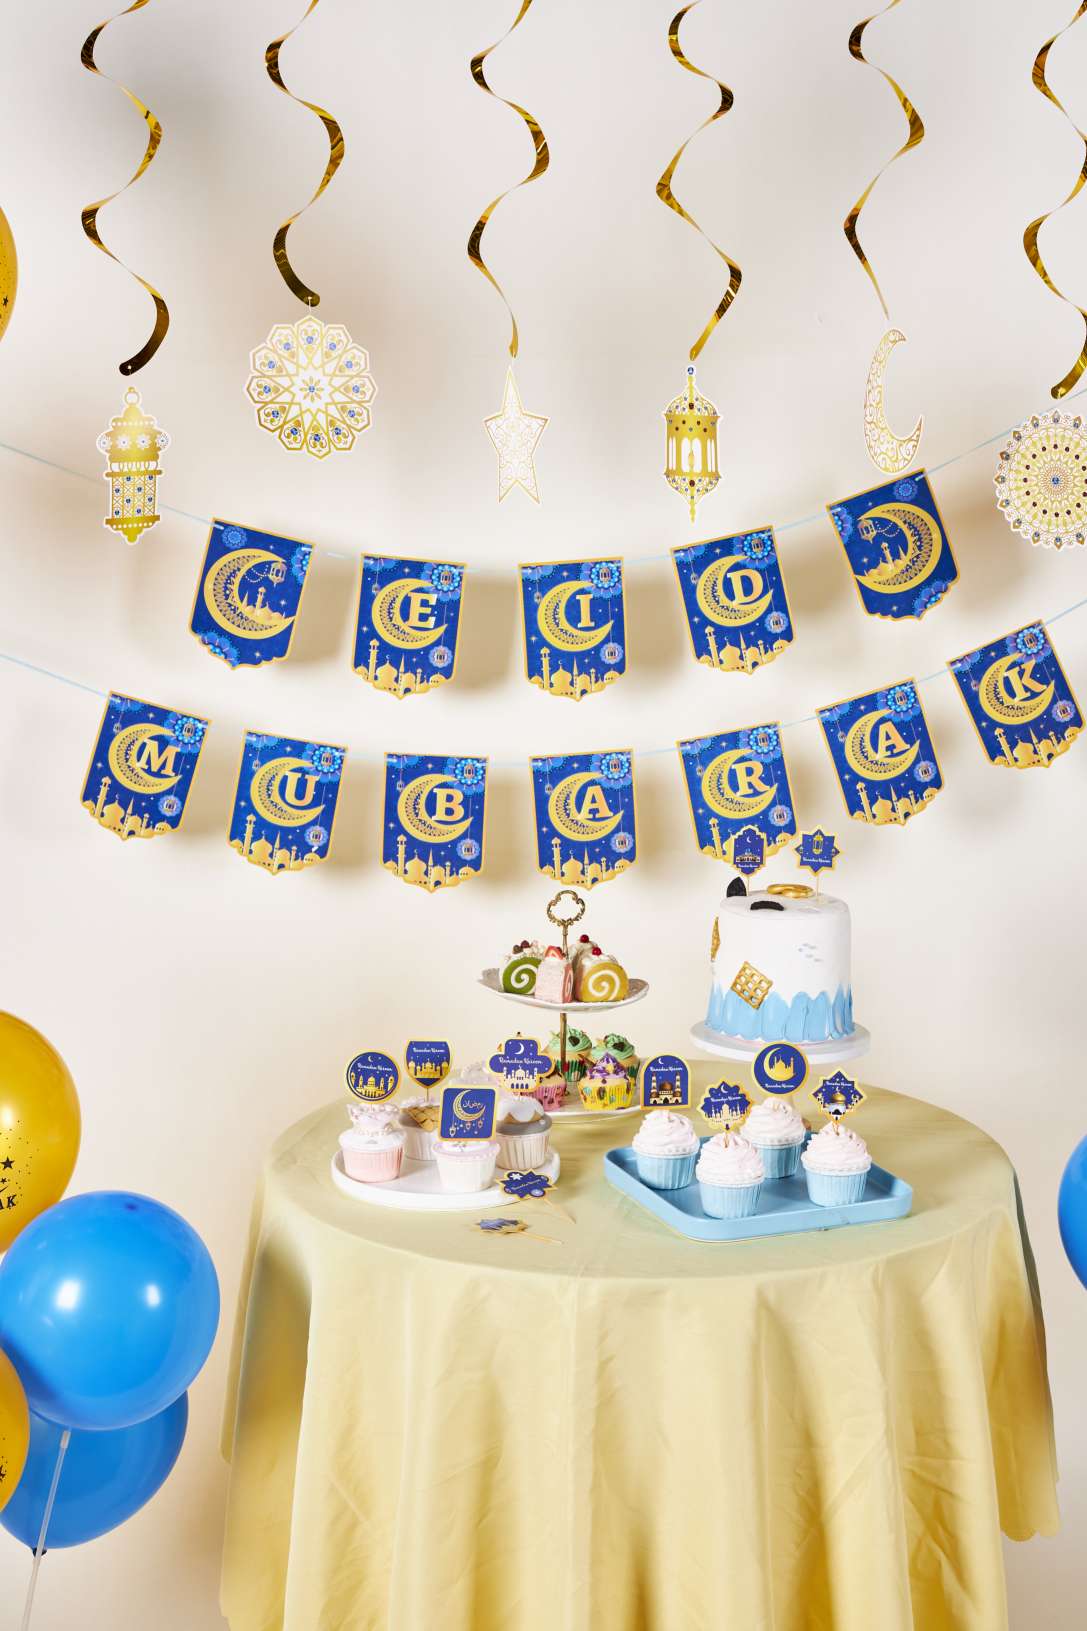 EID MUBARAK Supplies celebrations with eid mubarak banner and cake decorations